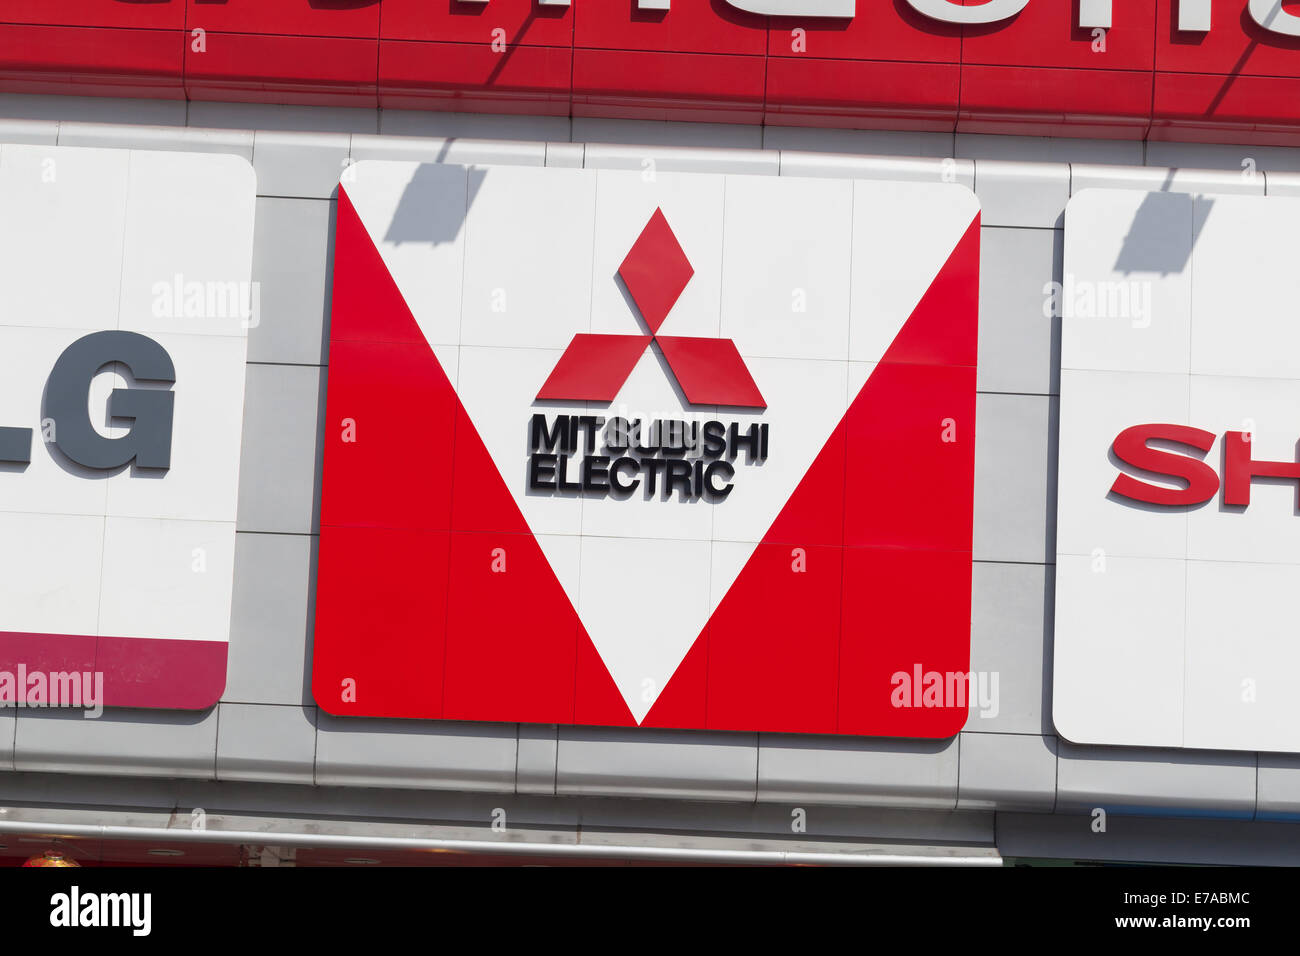 Mitsubishi electric sign Stock Photo